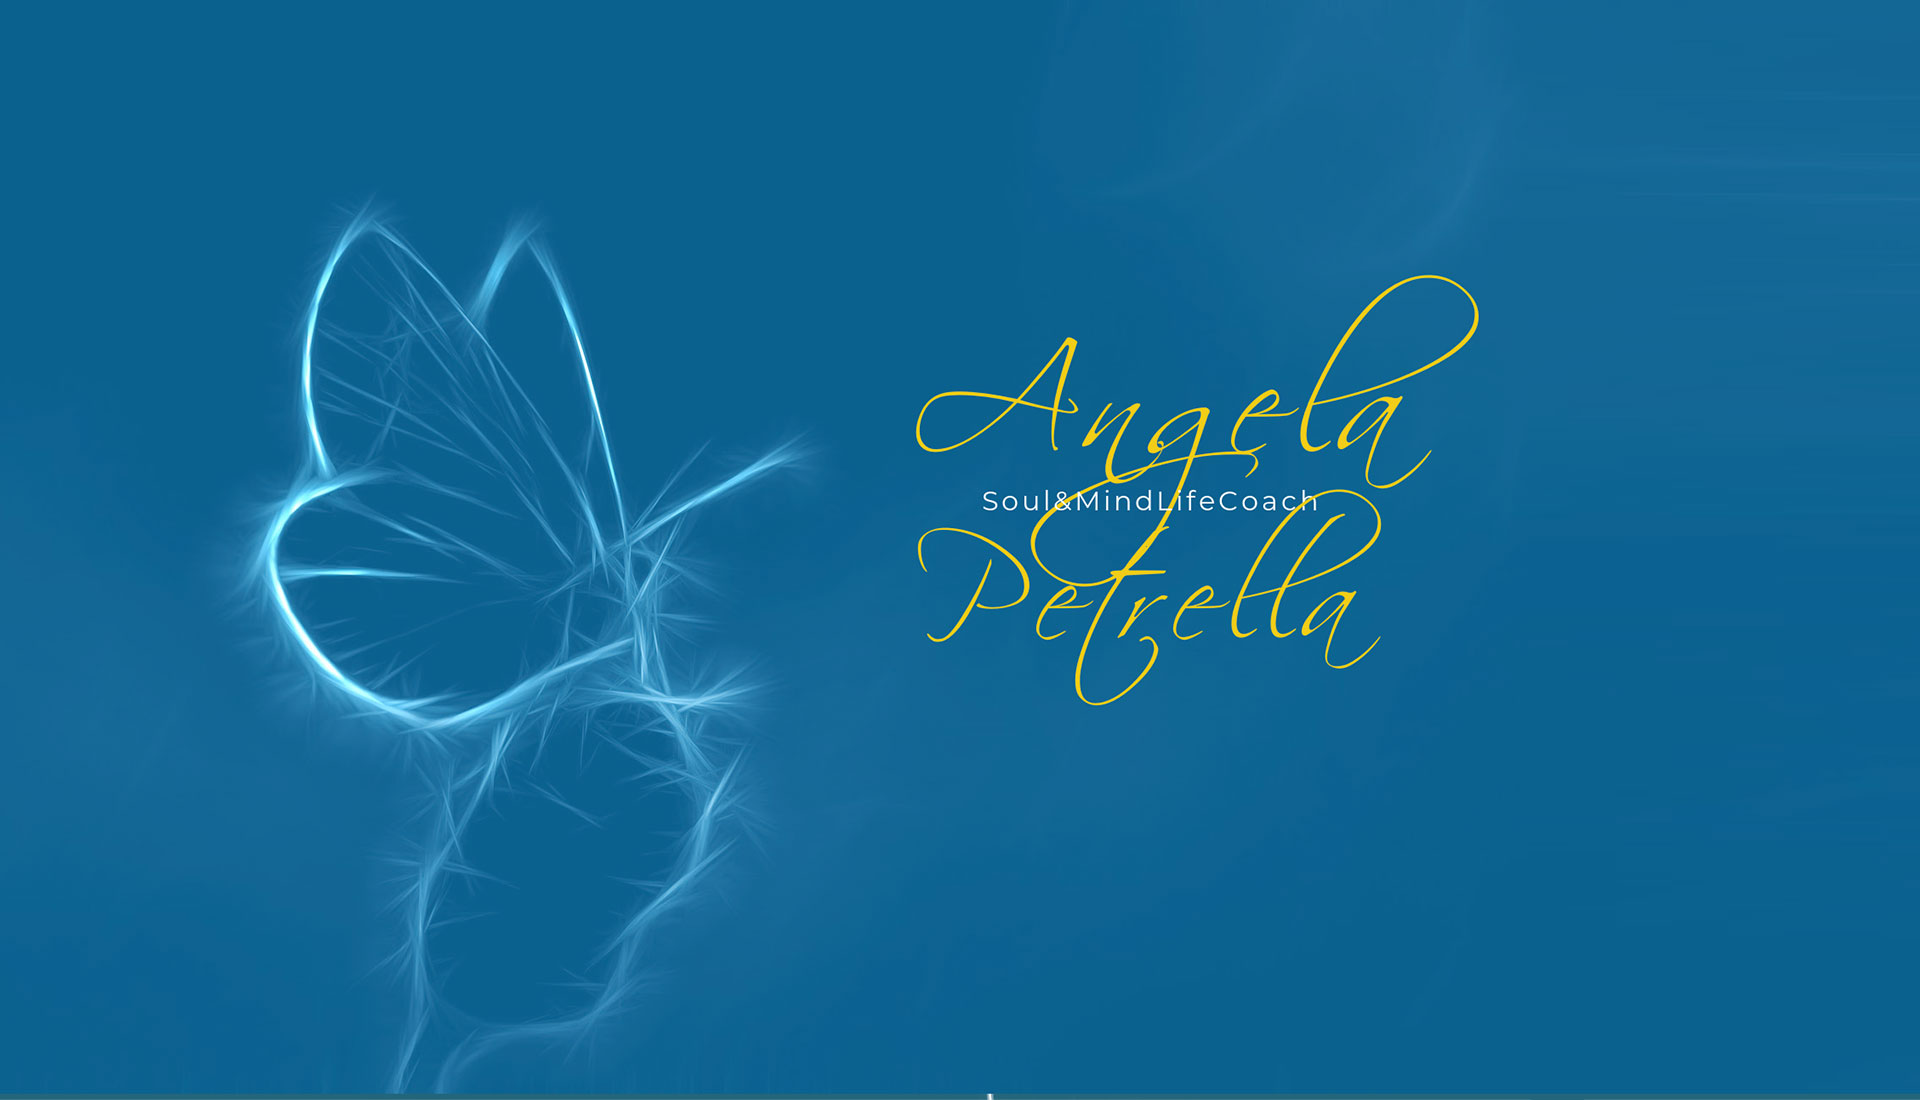 Life Coach - Angela Petrella